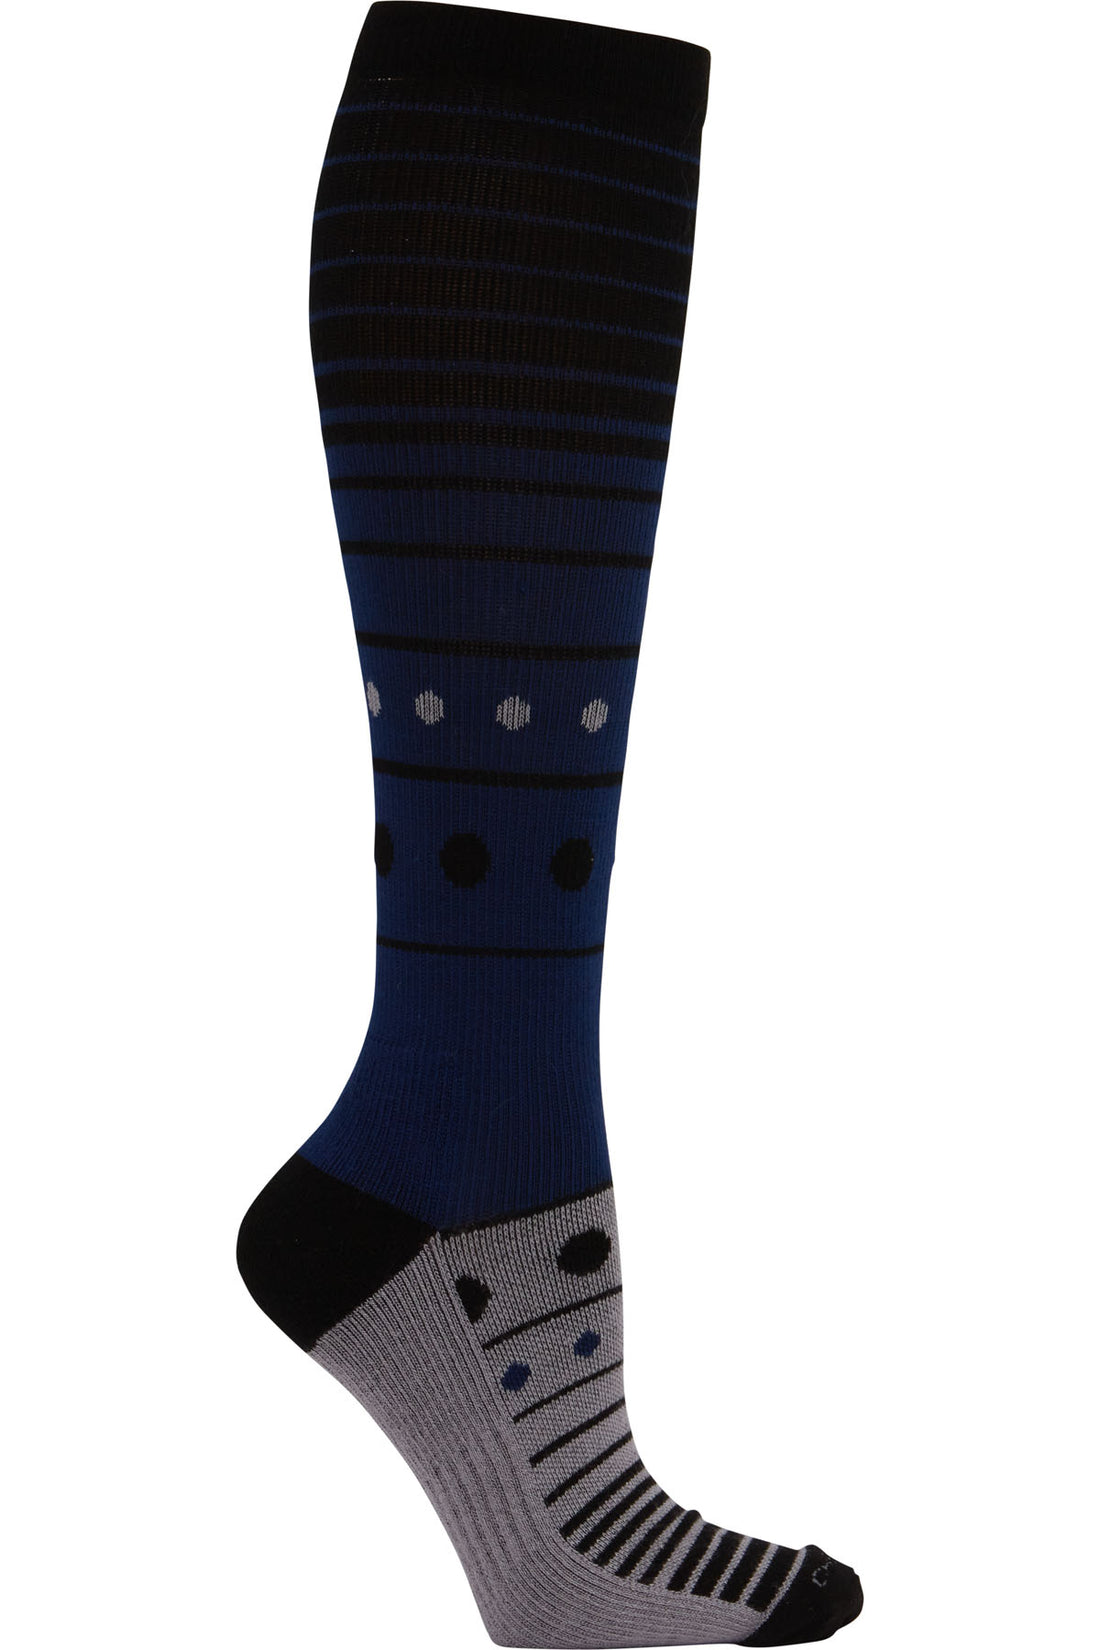 Unisex Knee High 15-20 Mmhg Compression Socks